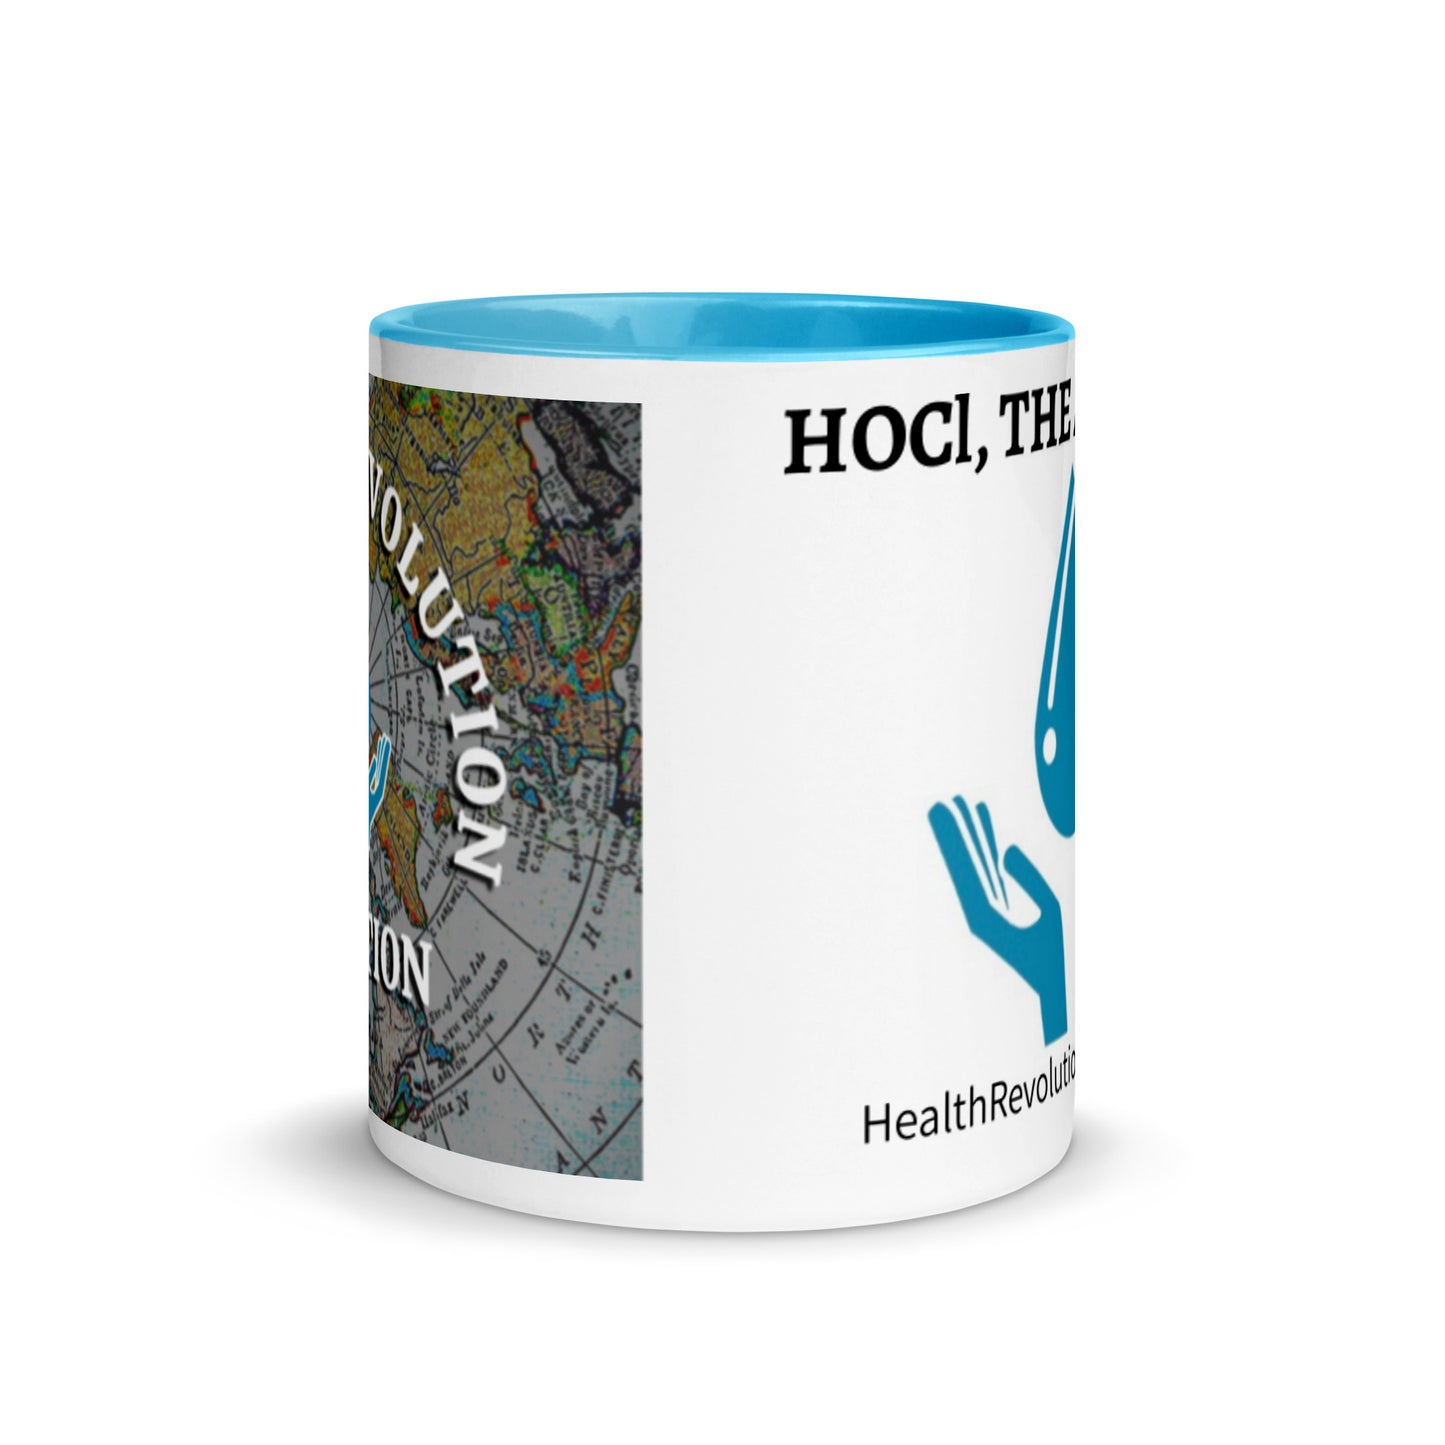 “HOCl, THE ANTIDOTE” Ceramic Coffee Mug (11 oz)